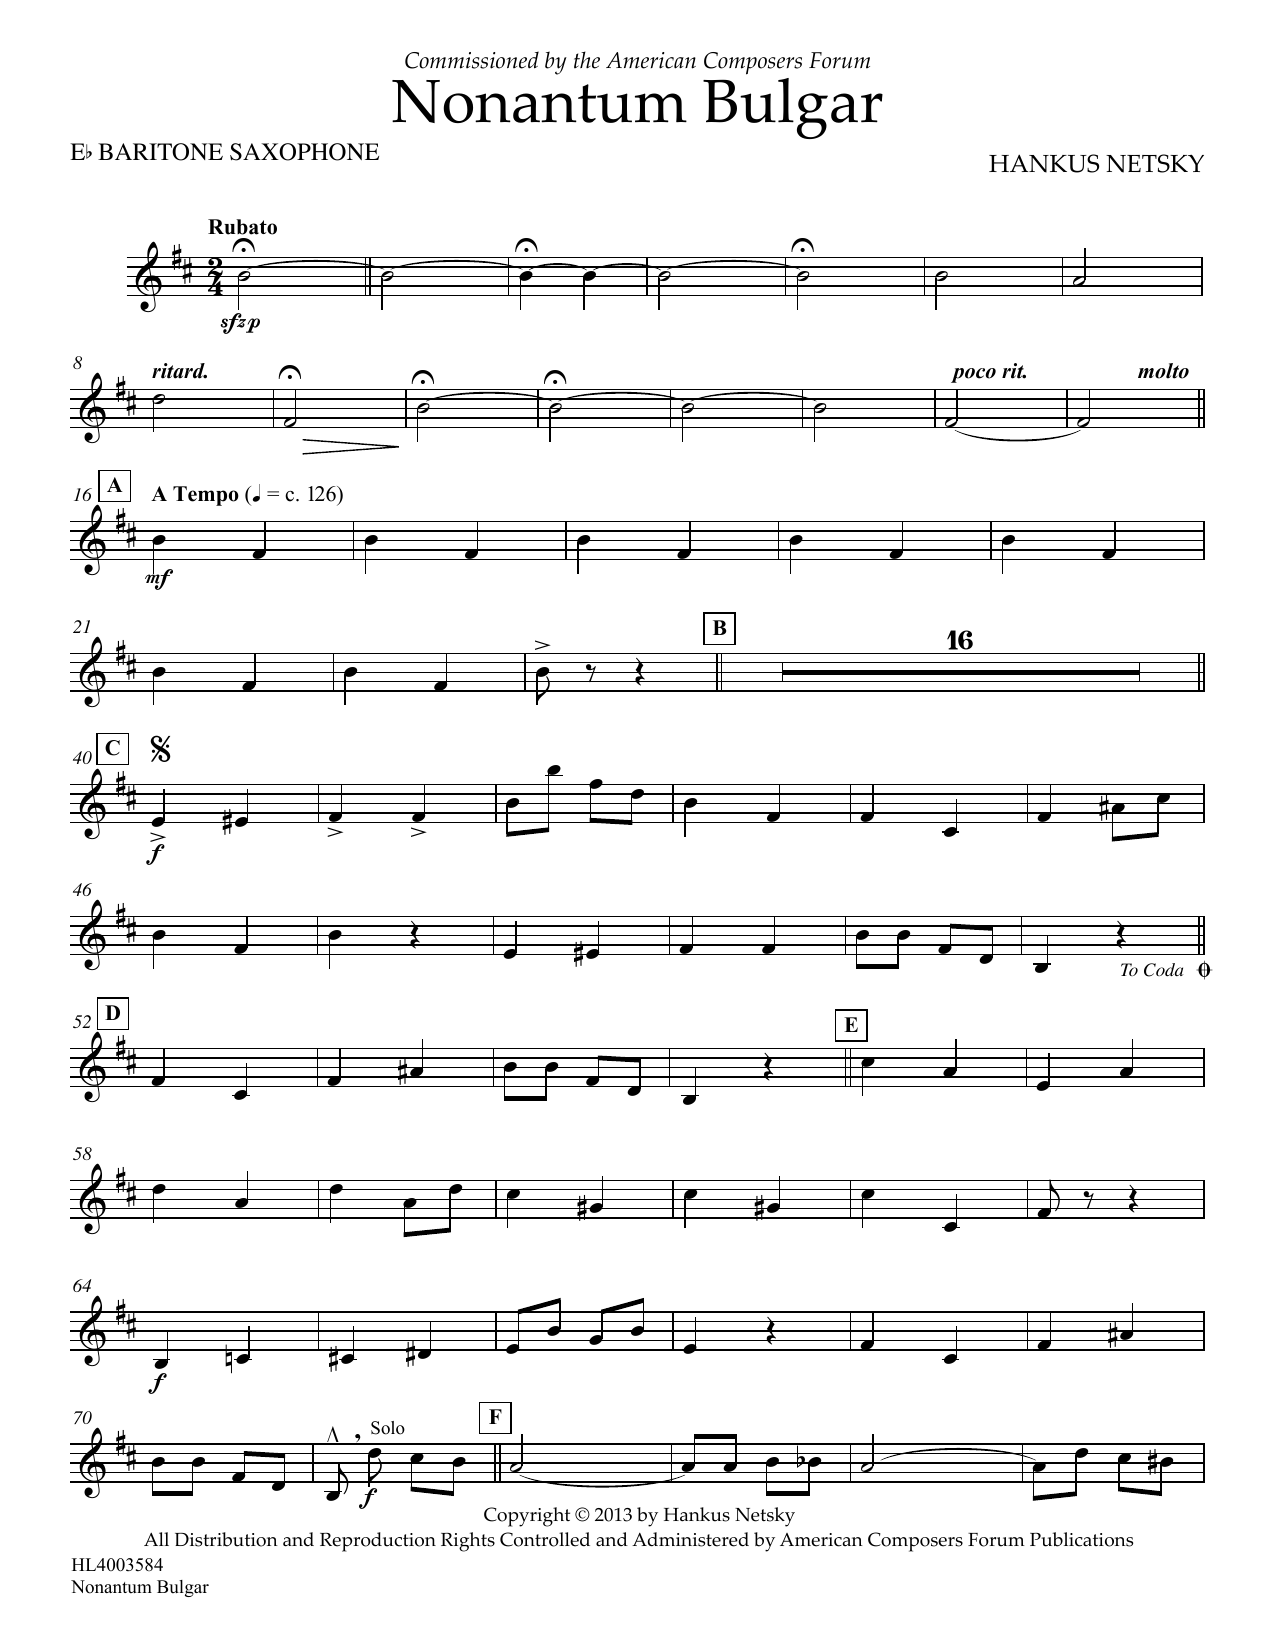 Hankus Netsky Nonantum Bulgar - Eb Baritone Saxophone Sheet Music Notes & Chords for Concert Band - Download or Print PDF